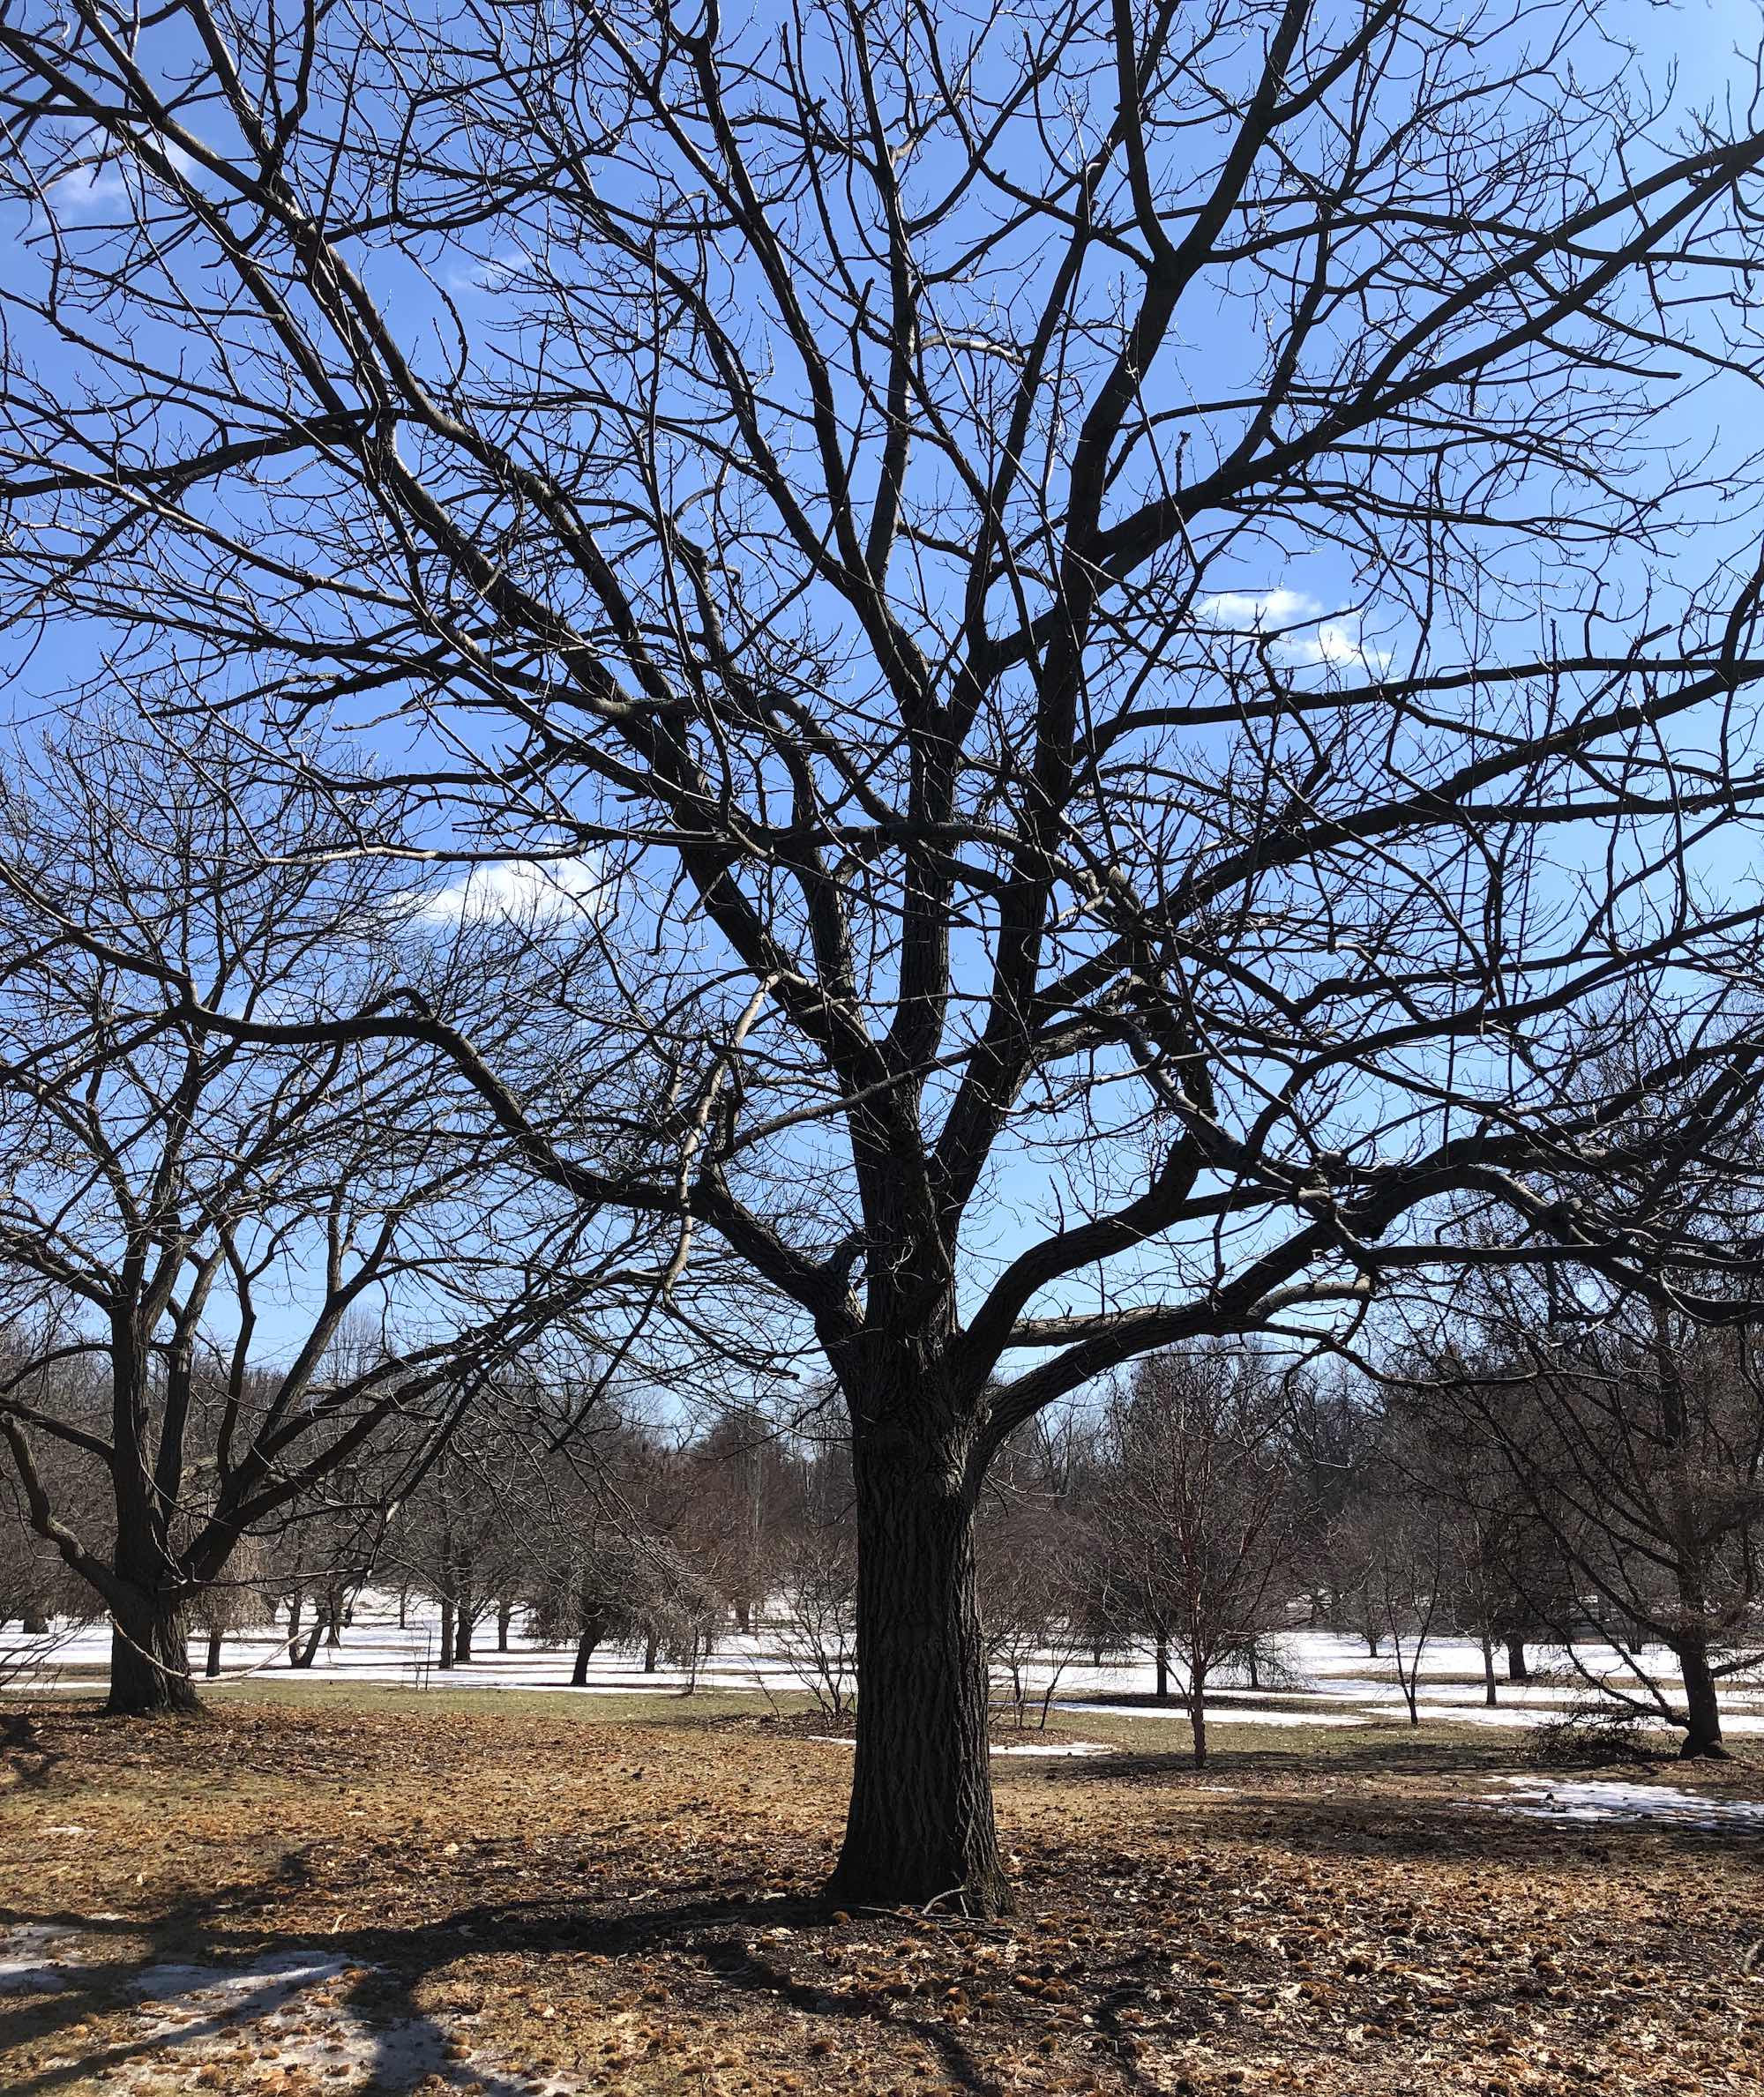 American Chestnut in Longenecker Gardens at the University of Wisconsin Arboretum on March 17, 2019.